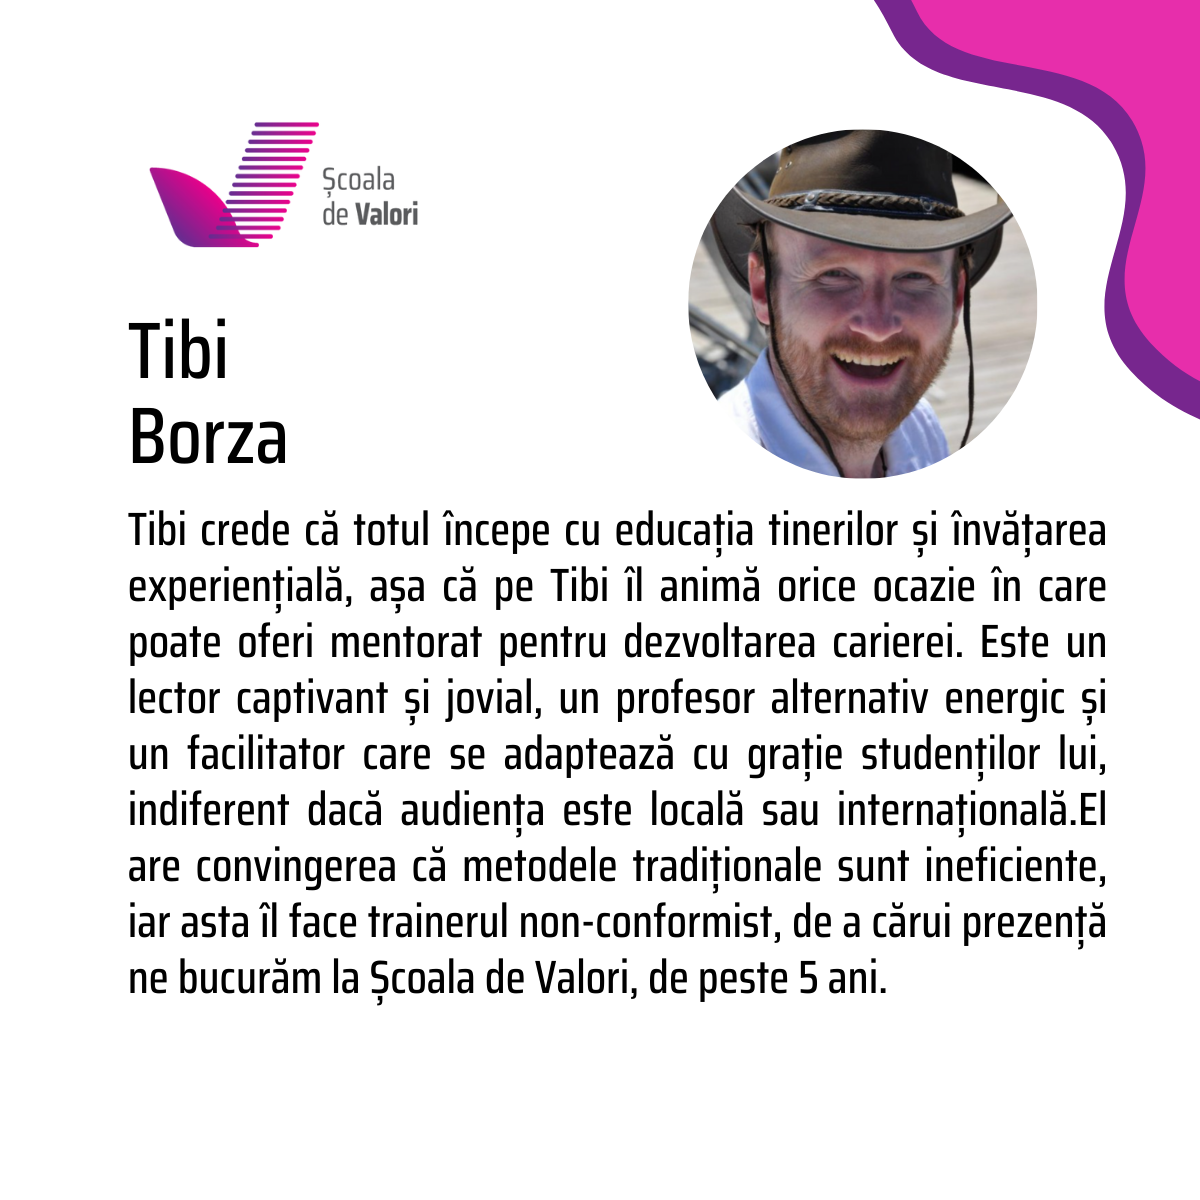 Tibi Borza